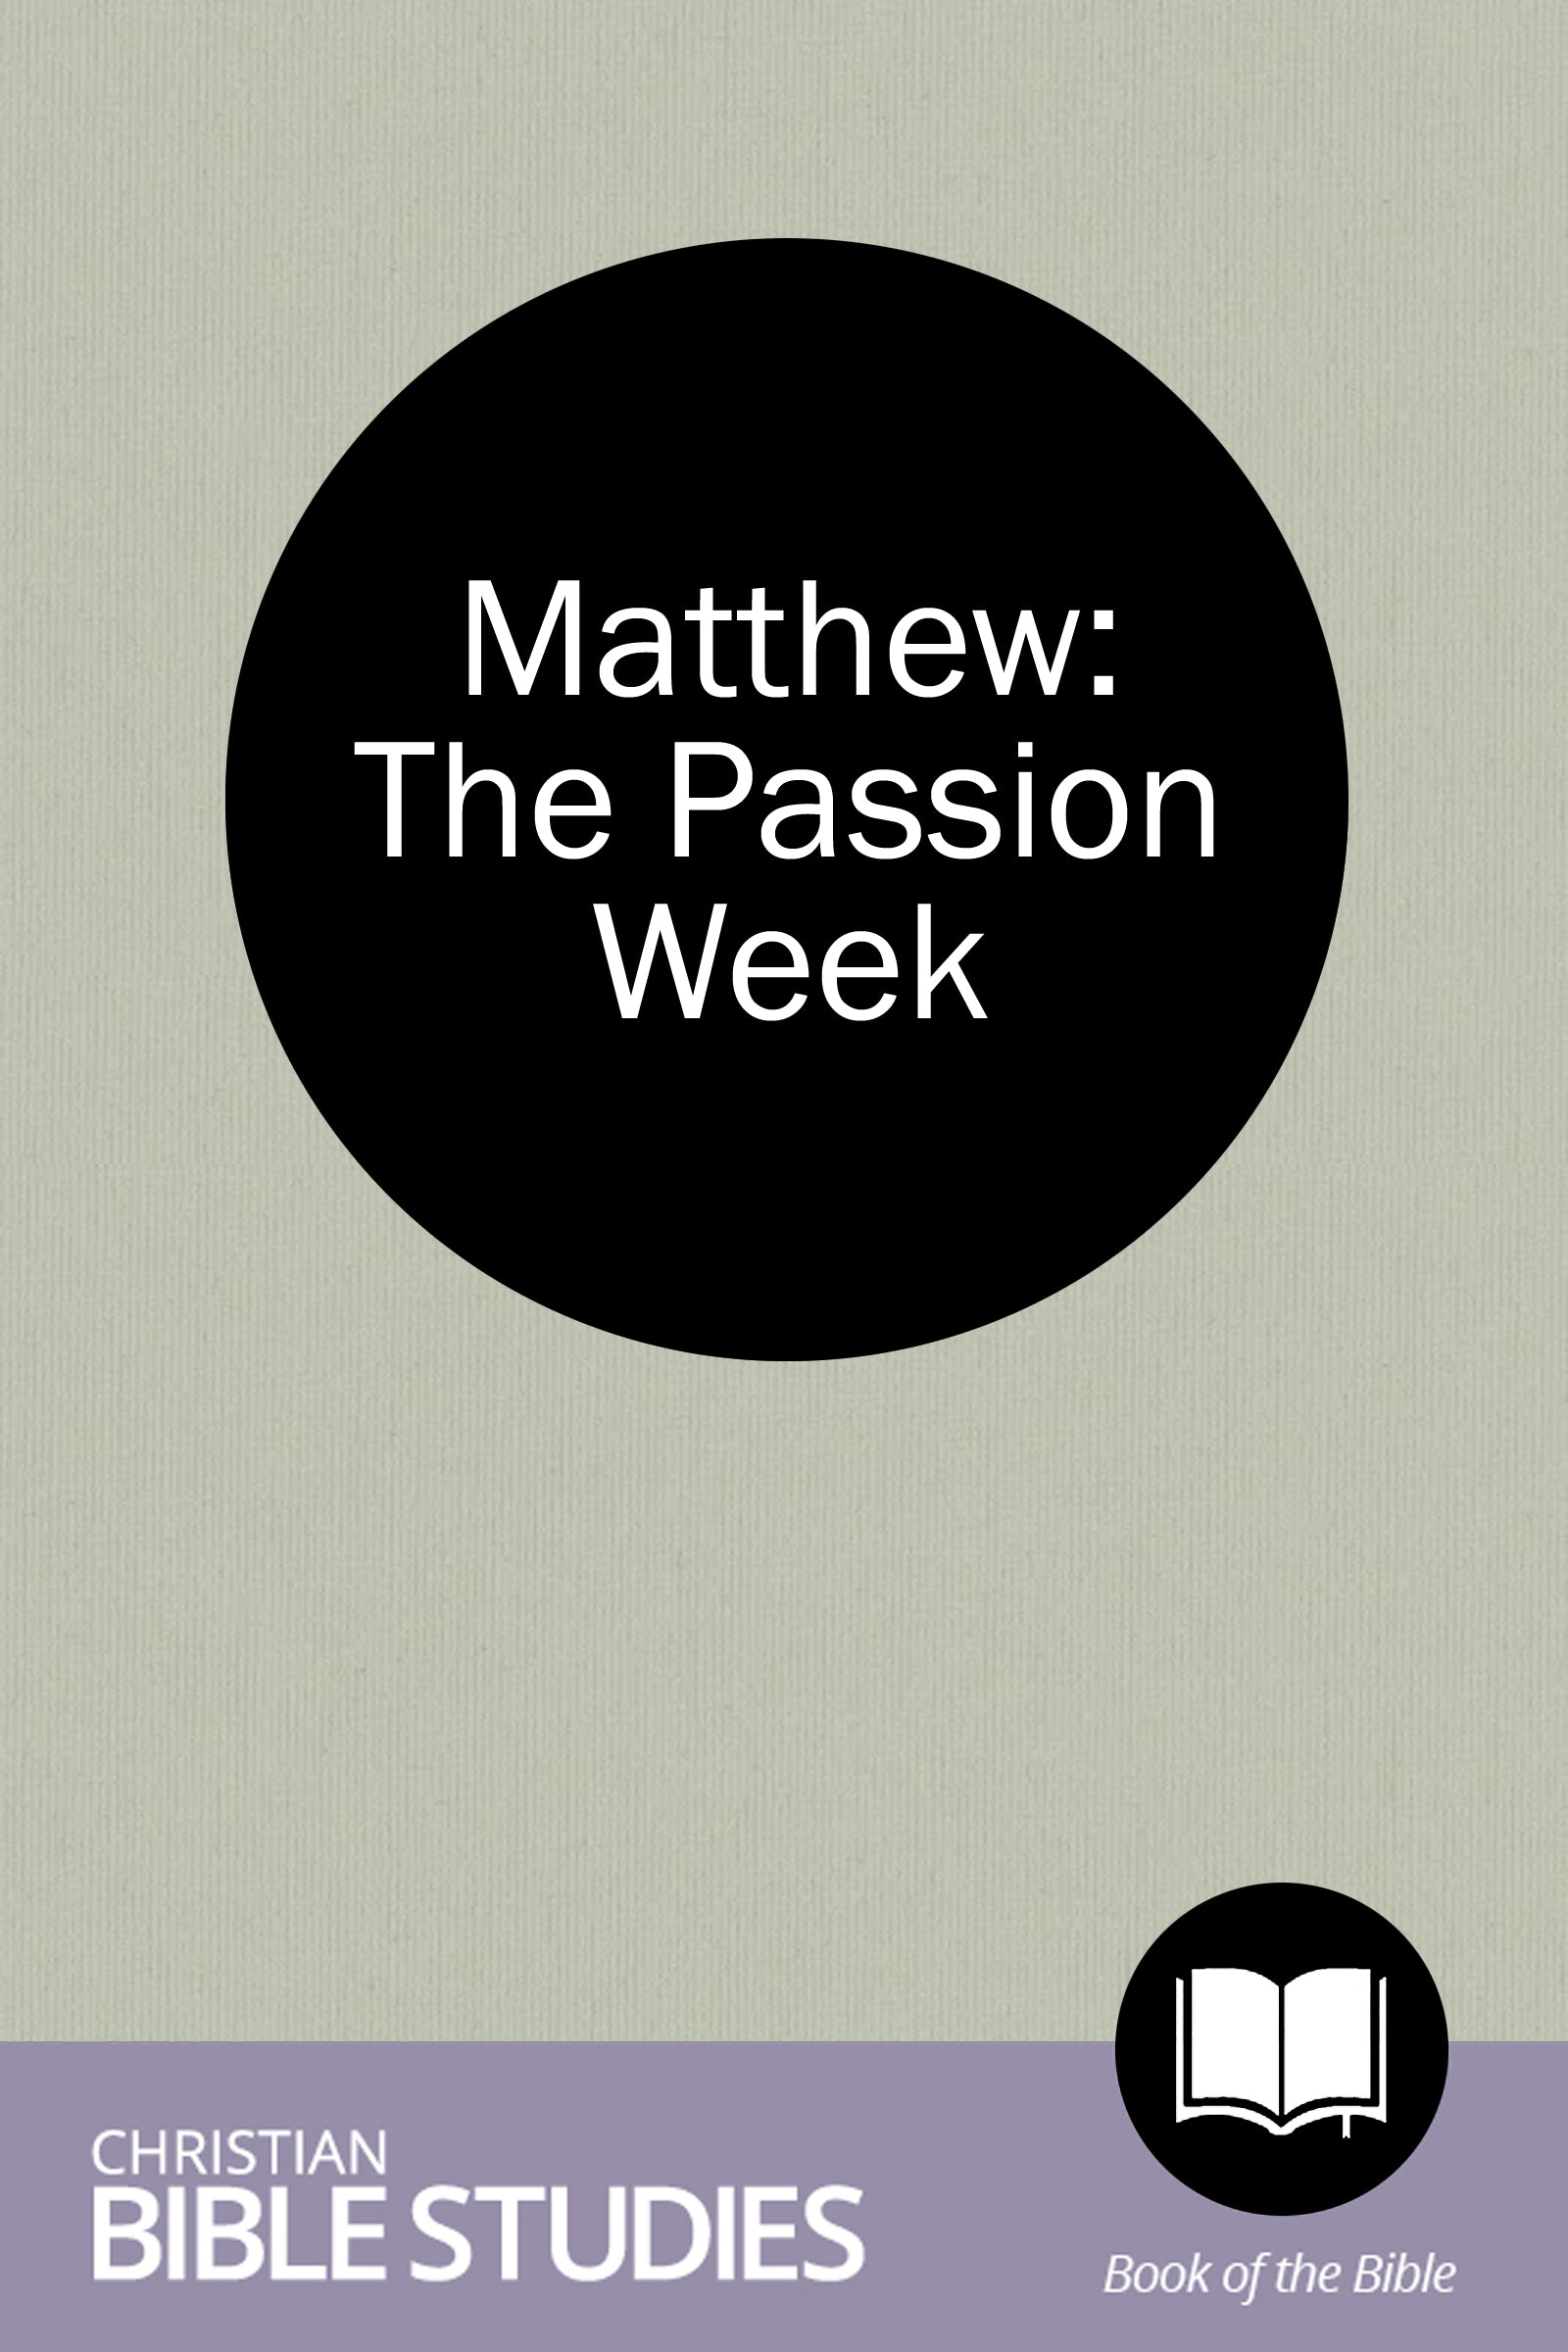 Matthew: The Passion Week